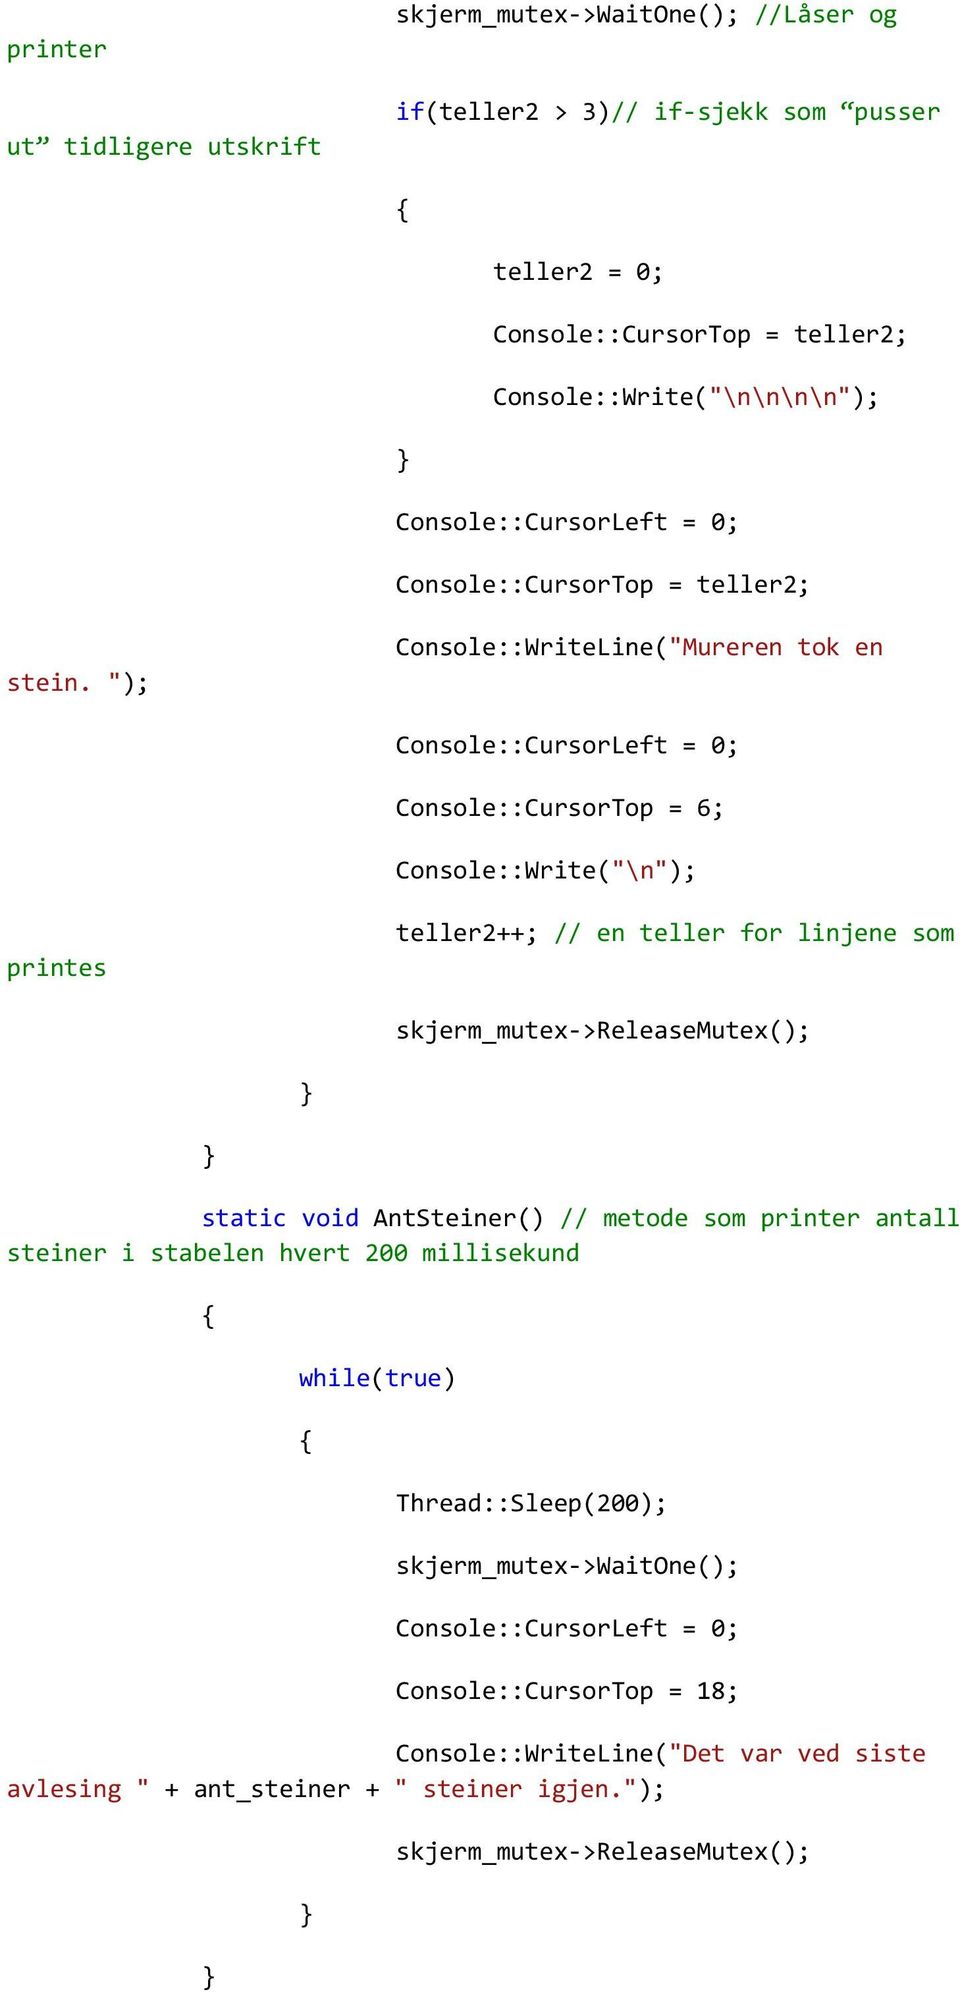 "); Console::WriteLine("Mureren tok en Console::CursorTop = 6; Console::Write("\n"); printes teller2++; // en teller for linjene som skjerm_mutex->releasemutex();